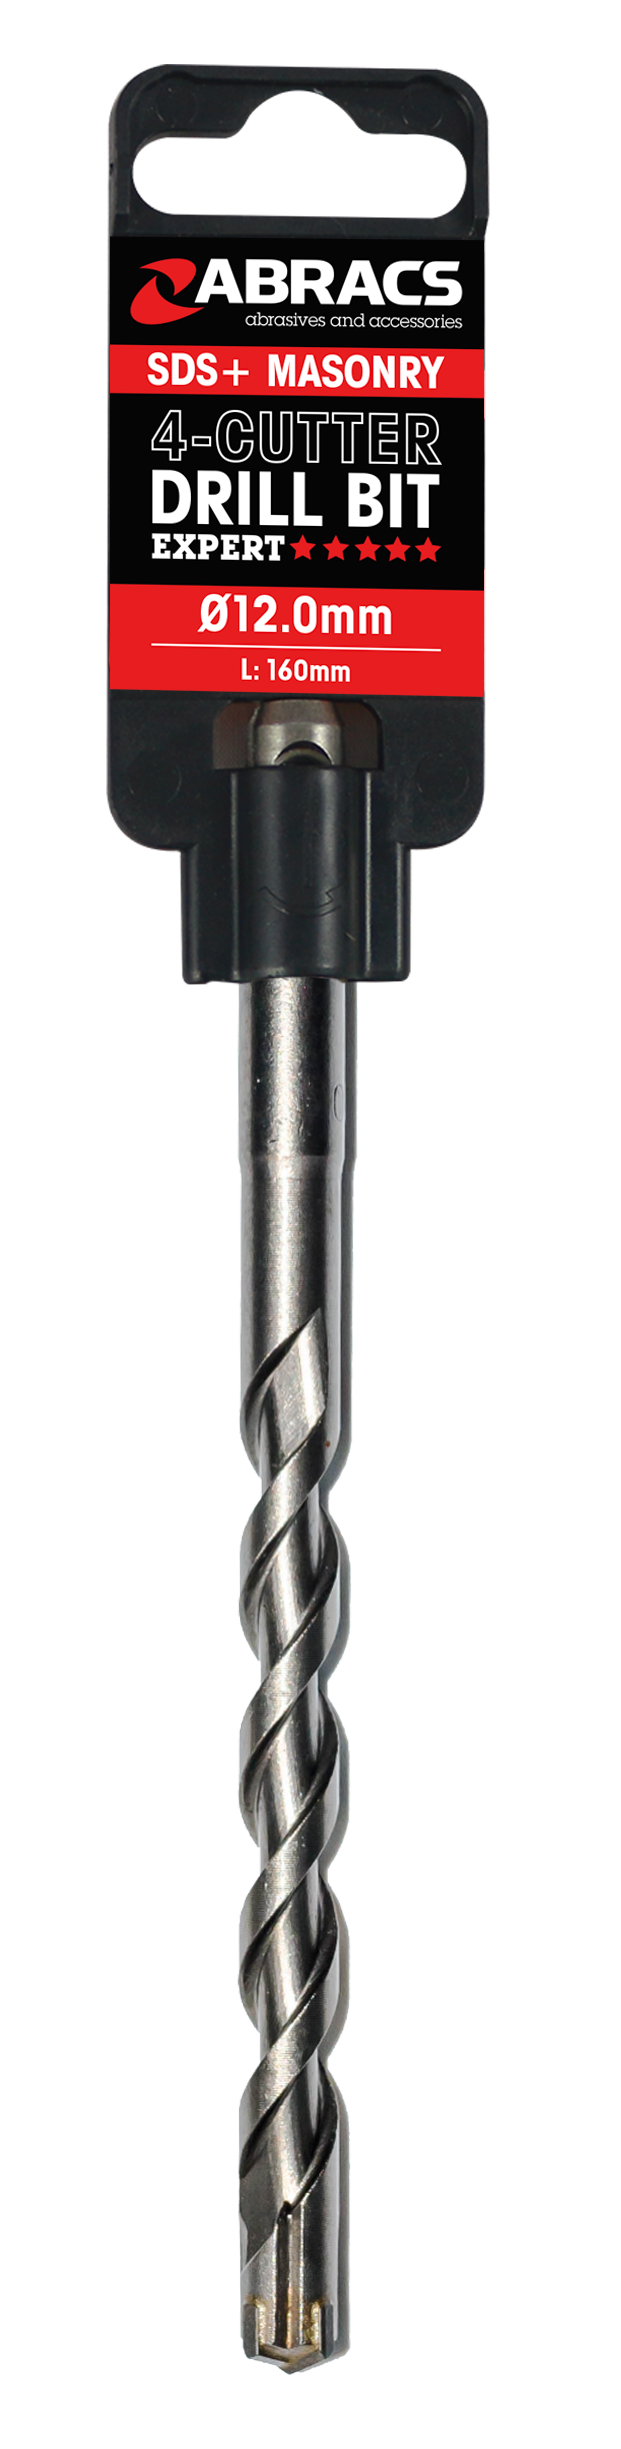 DBCX140310 14.0mm x 310mm SDS+ Masonry Drill Bit - 4 Cutter